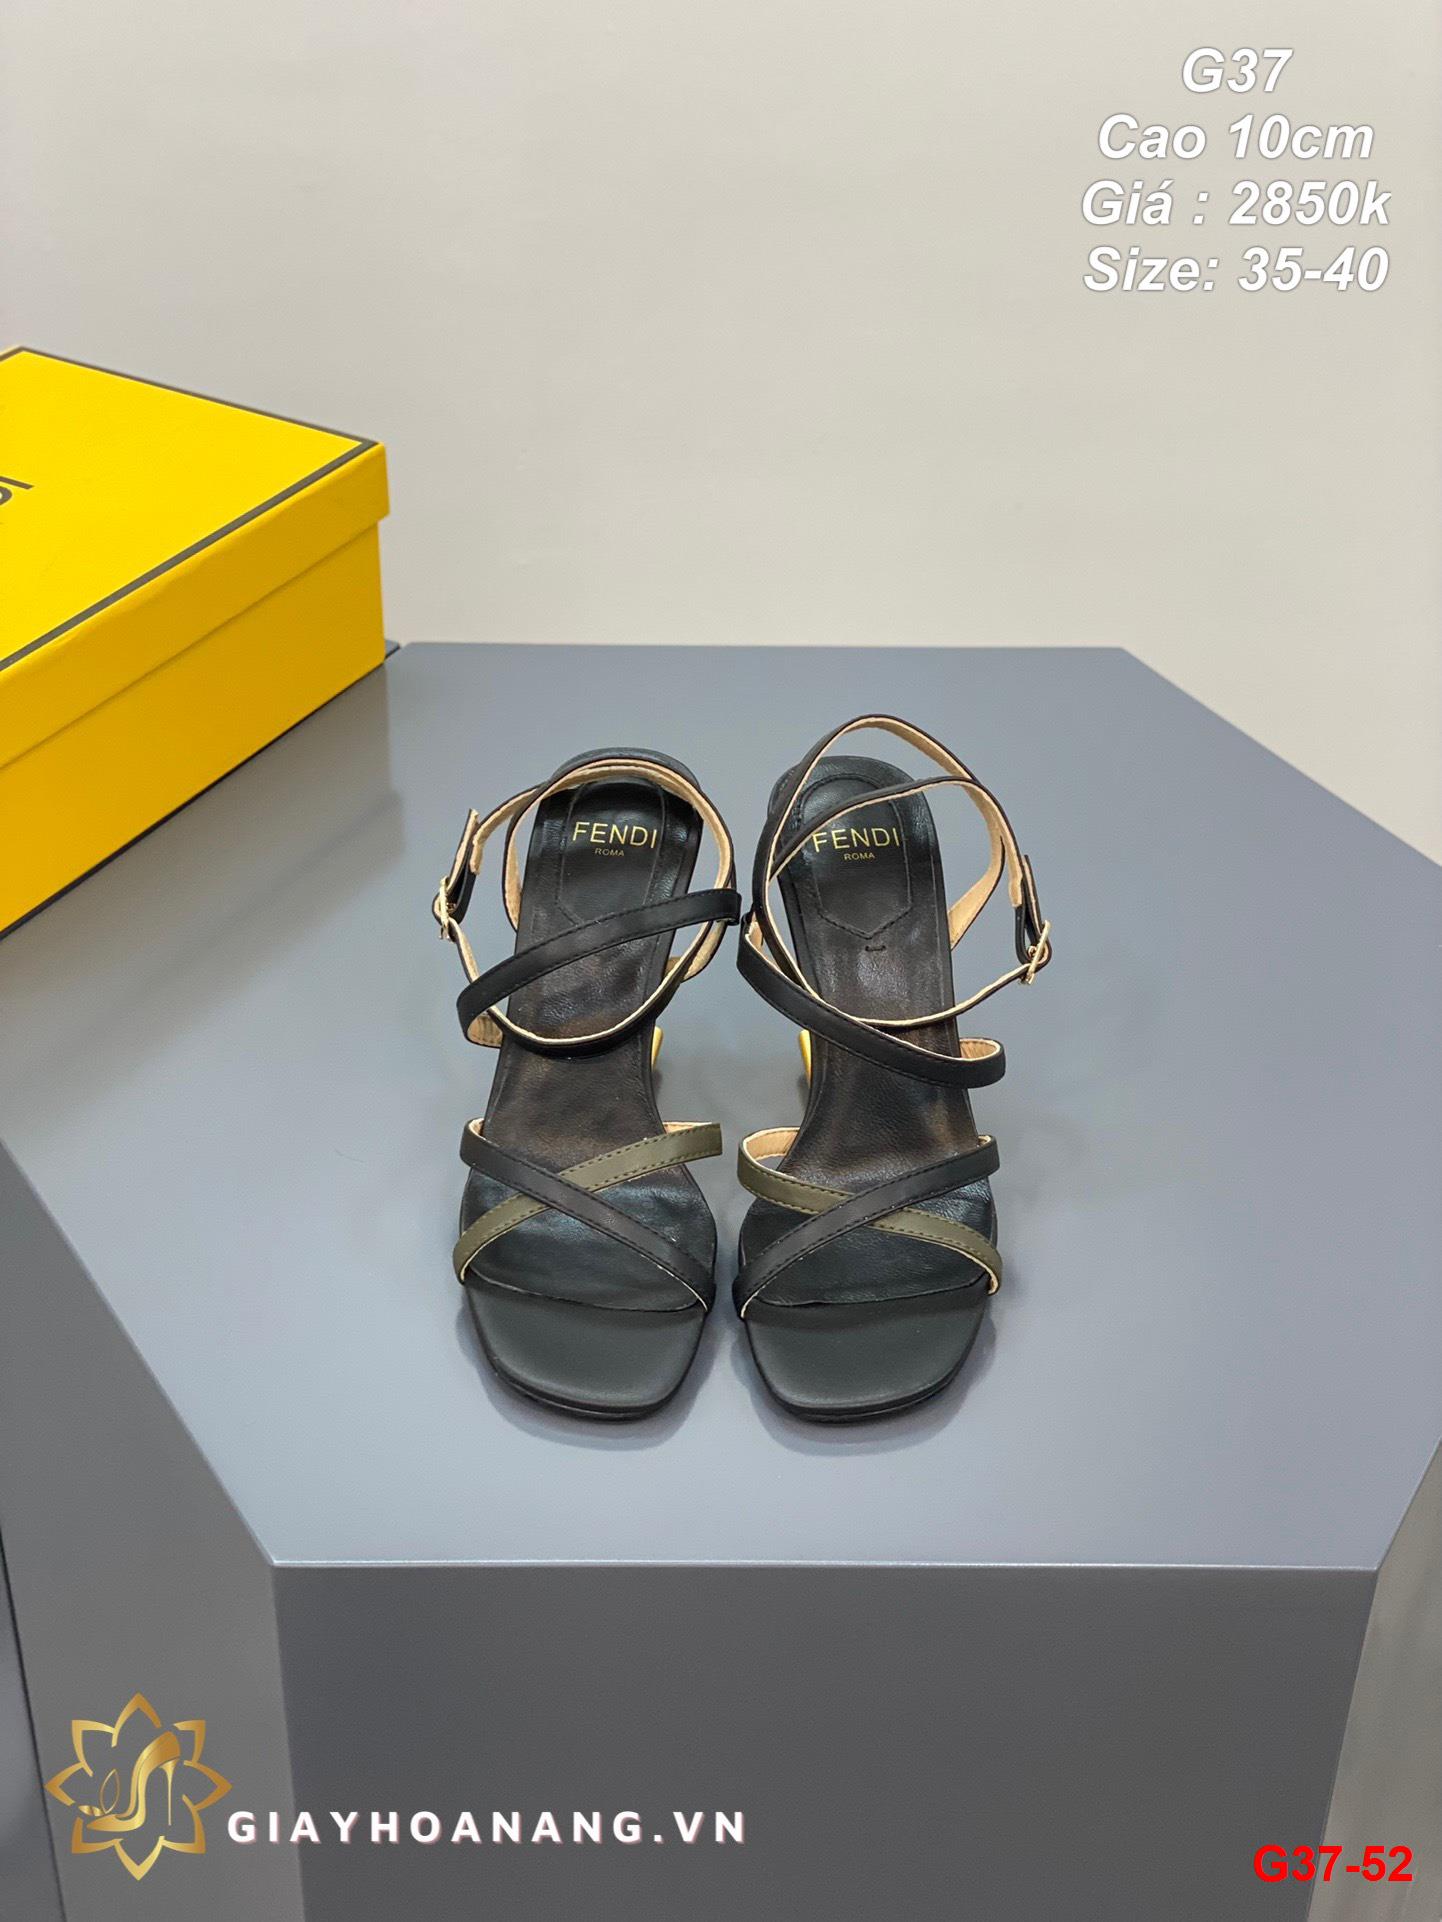 G37-52 Fendi sandal cao 10cm siêu cấp